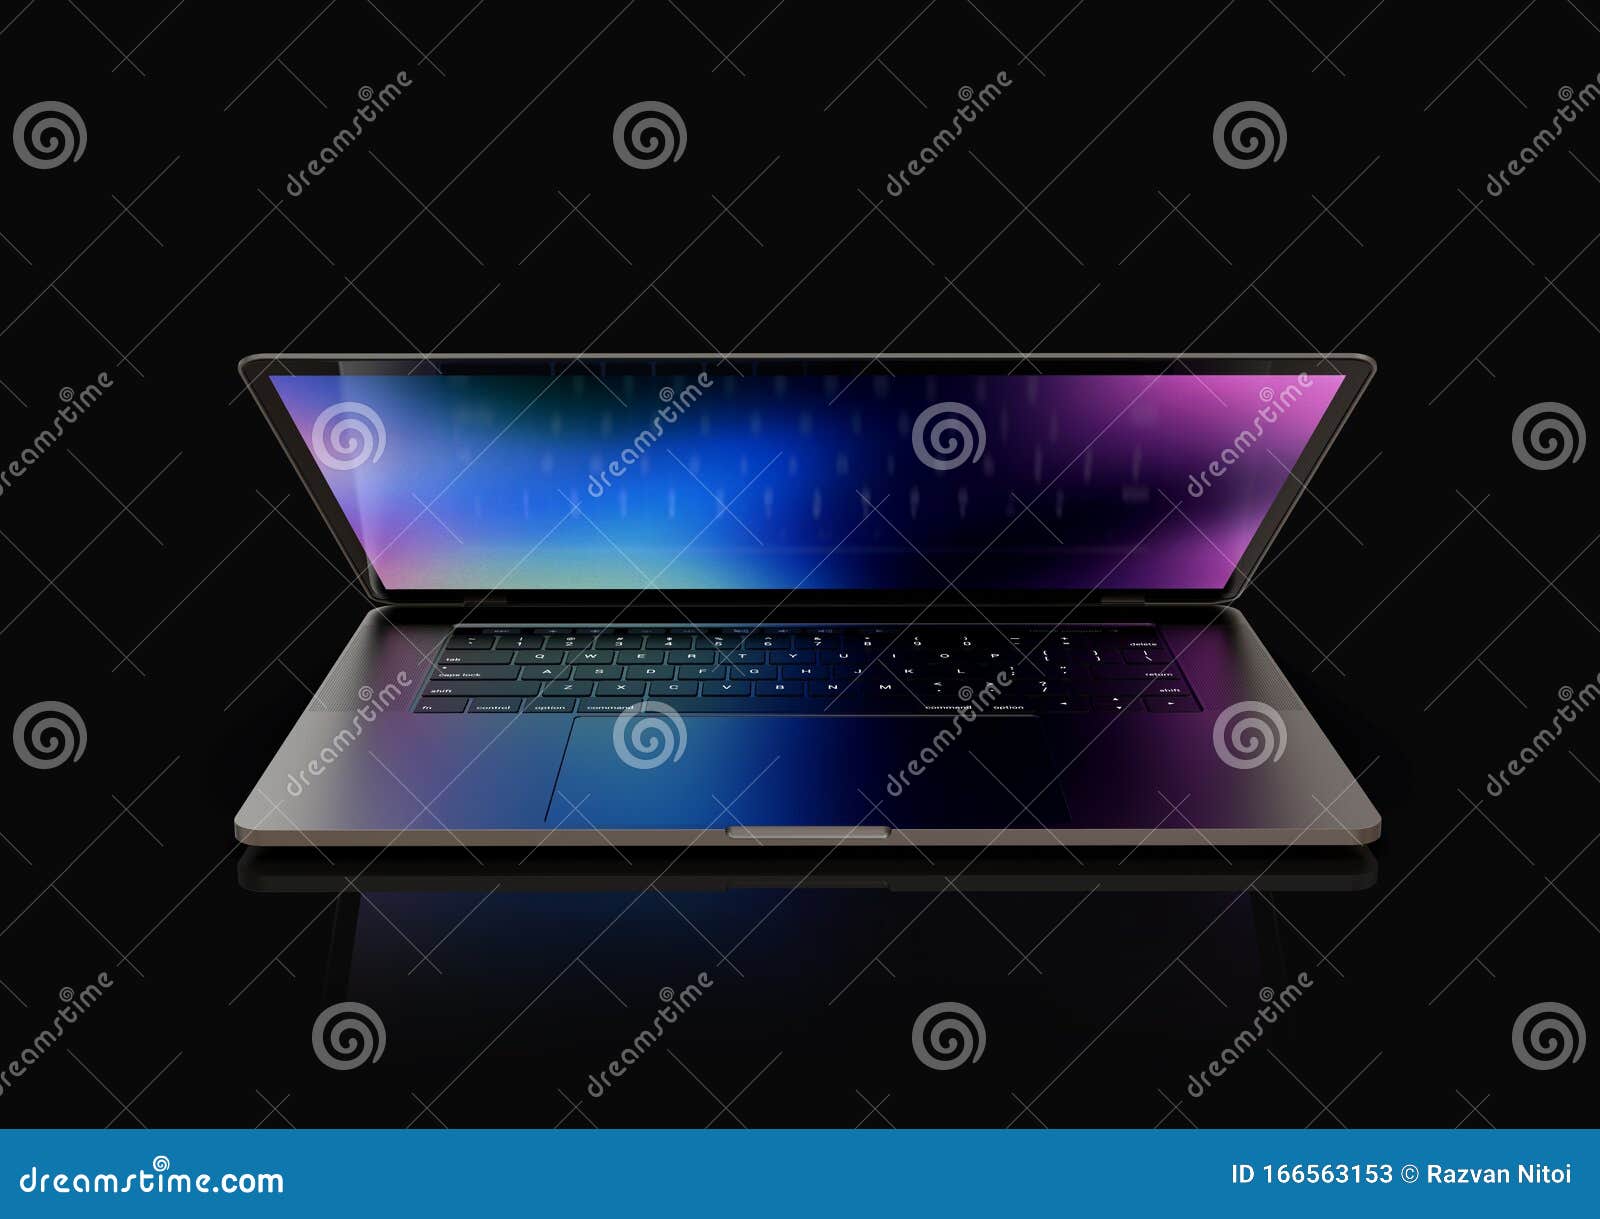 macbook pro 15 inch similar laptop computer detail